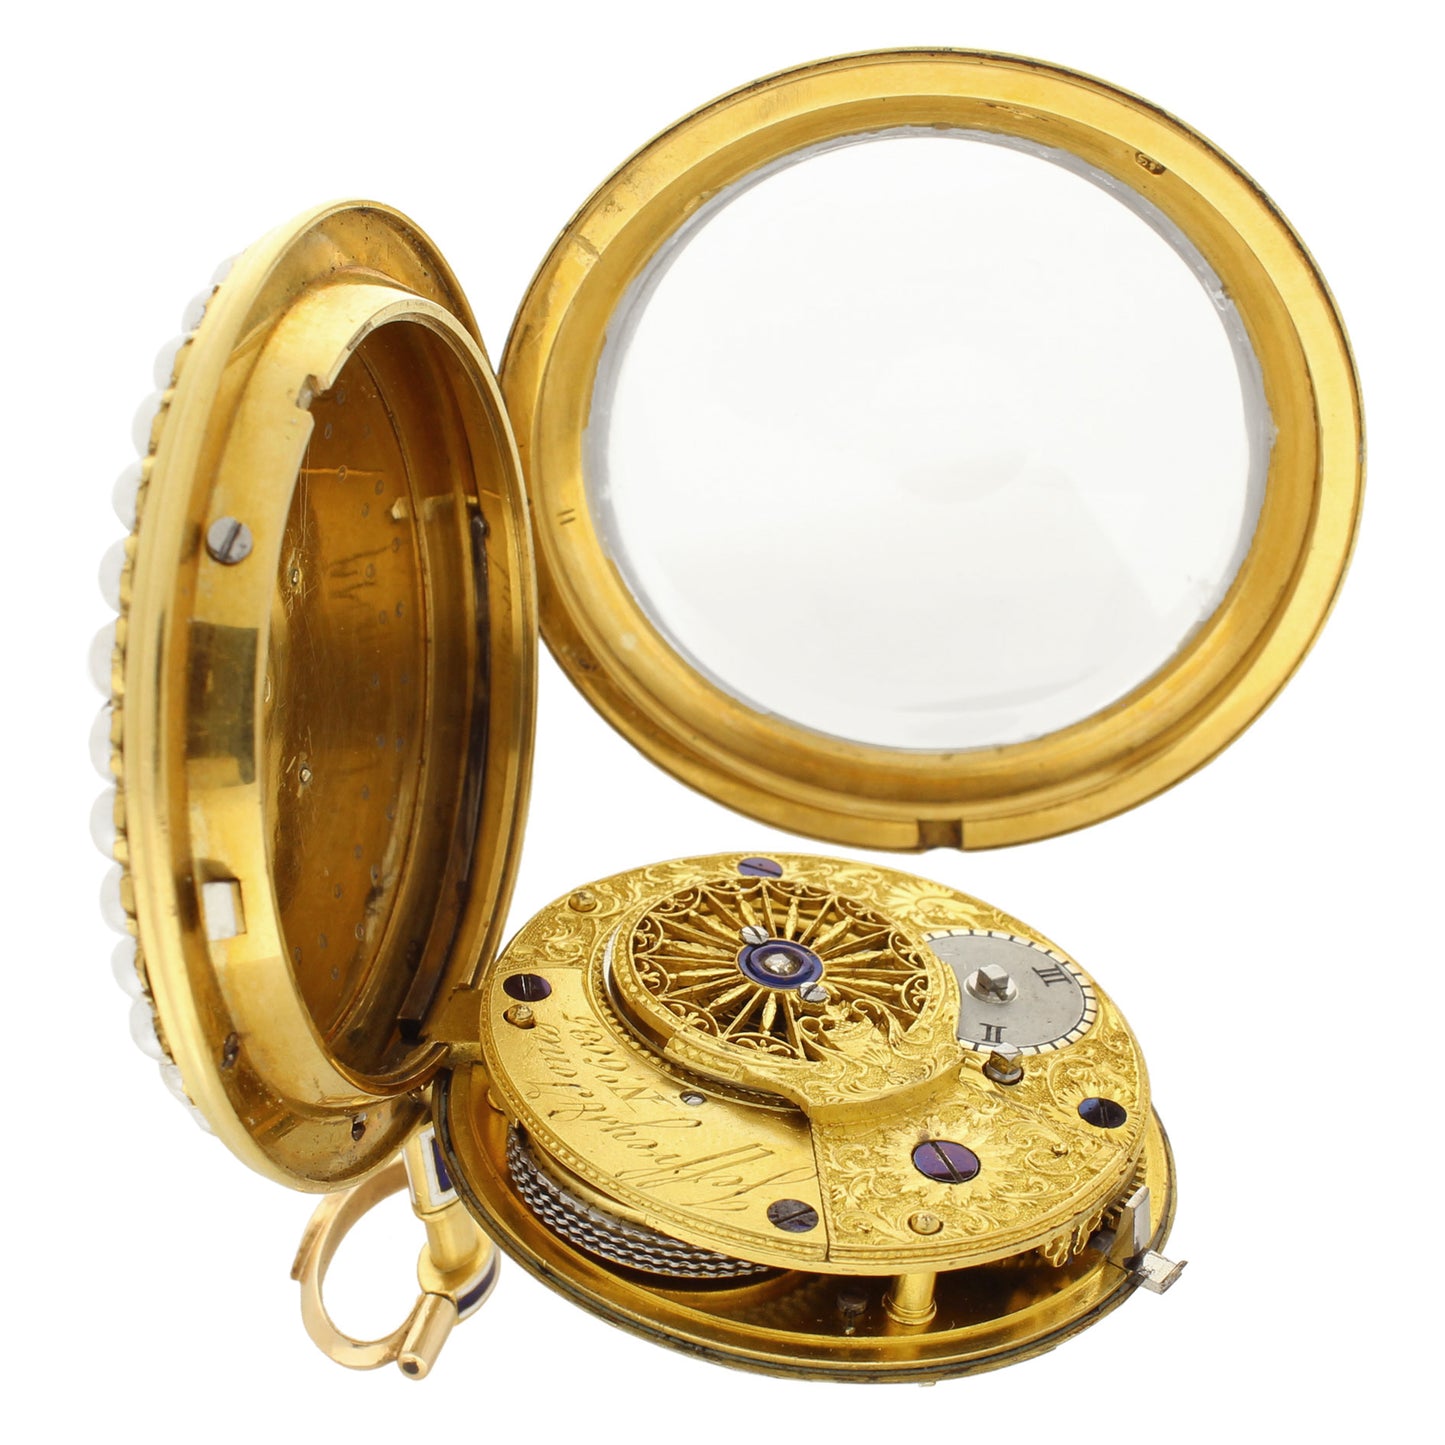 18ct yellow gold Jefferys & Jones enamel, diamond and pearl set open face pocket watch. Circa 1780